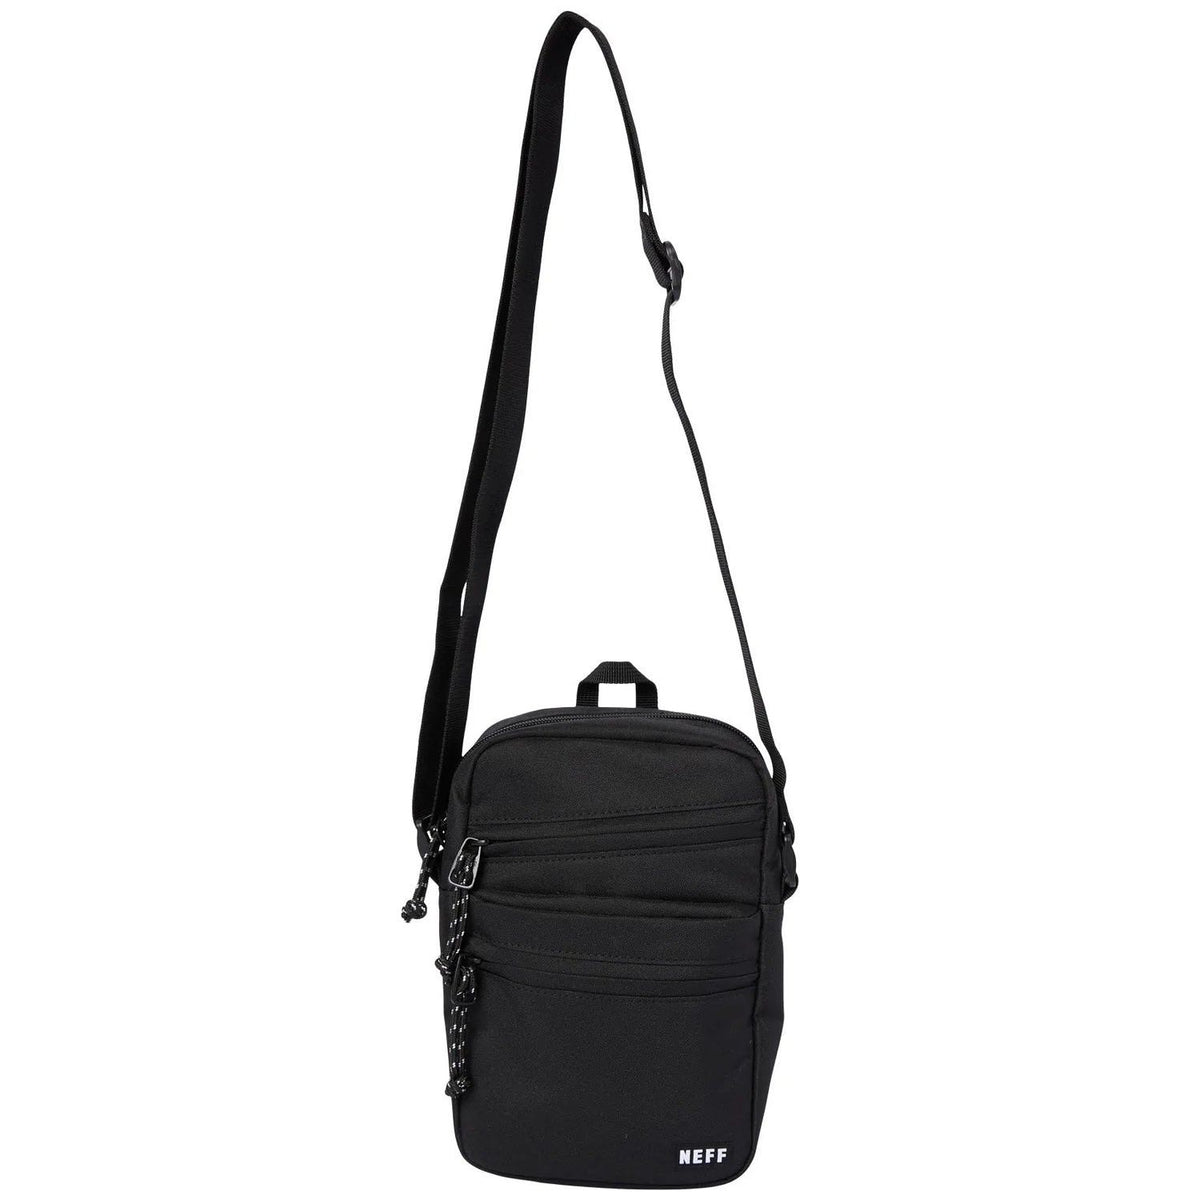 Neff Camo Black Backpack | eBay